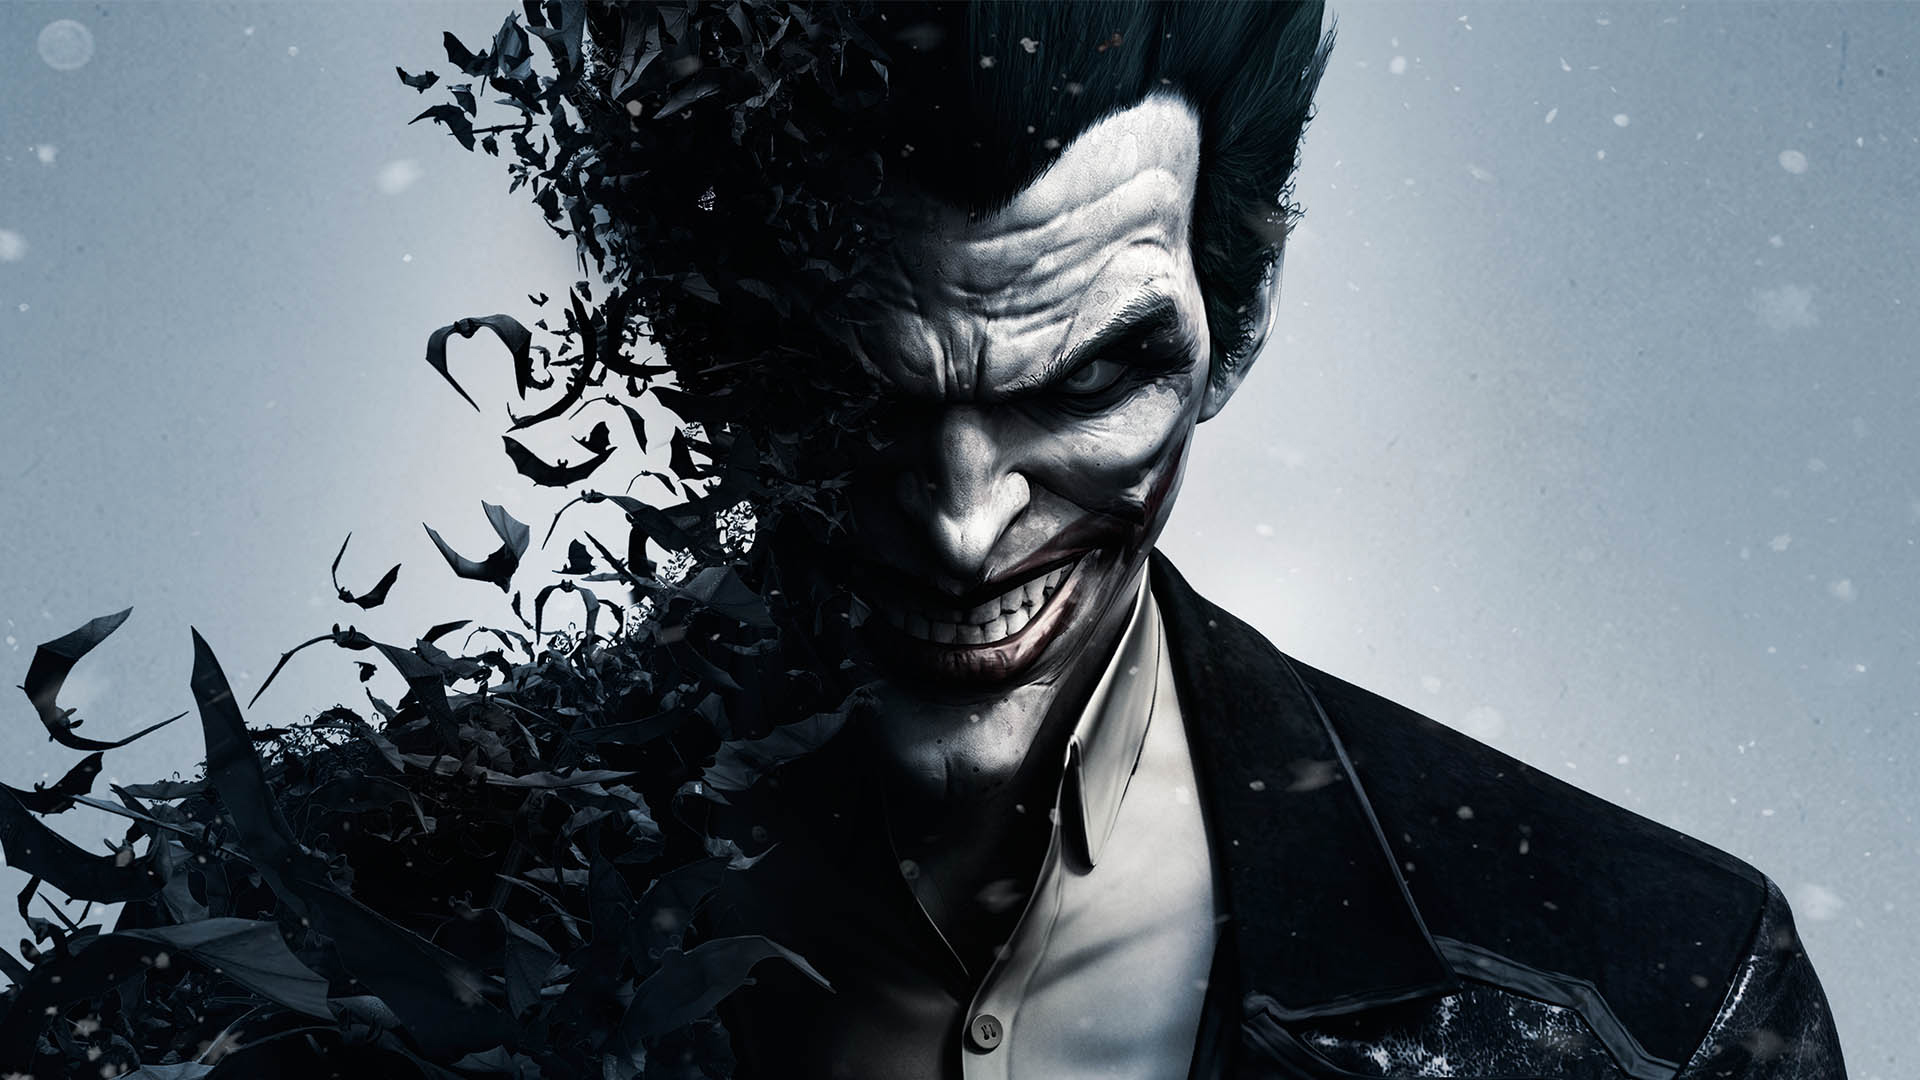 Joker Movie Posters 4k Mobile Wallpapers - Wallpaper Cave